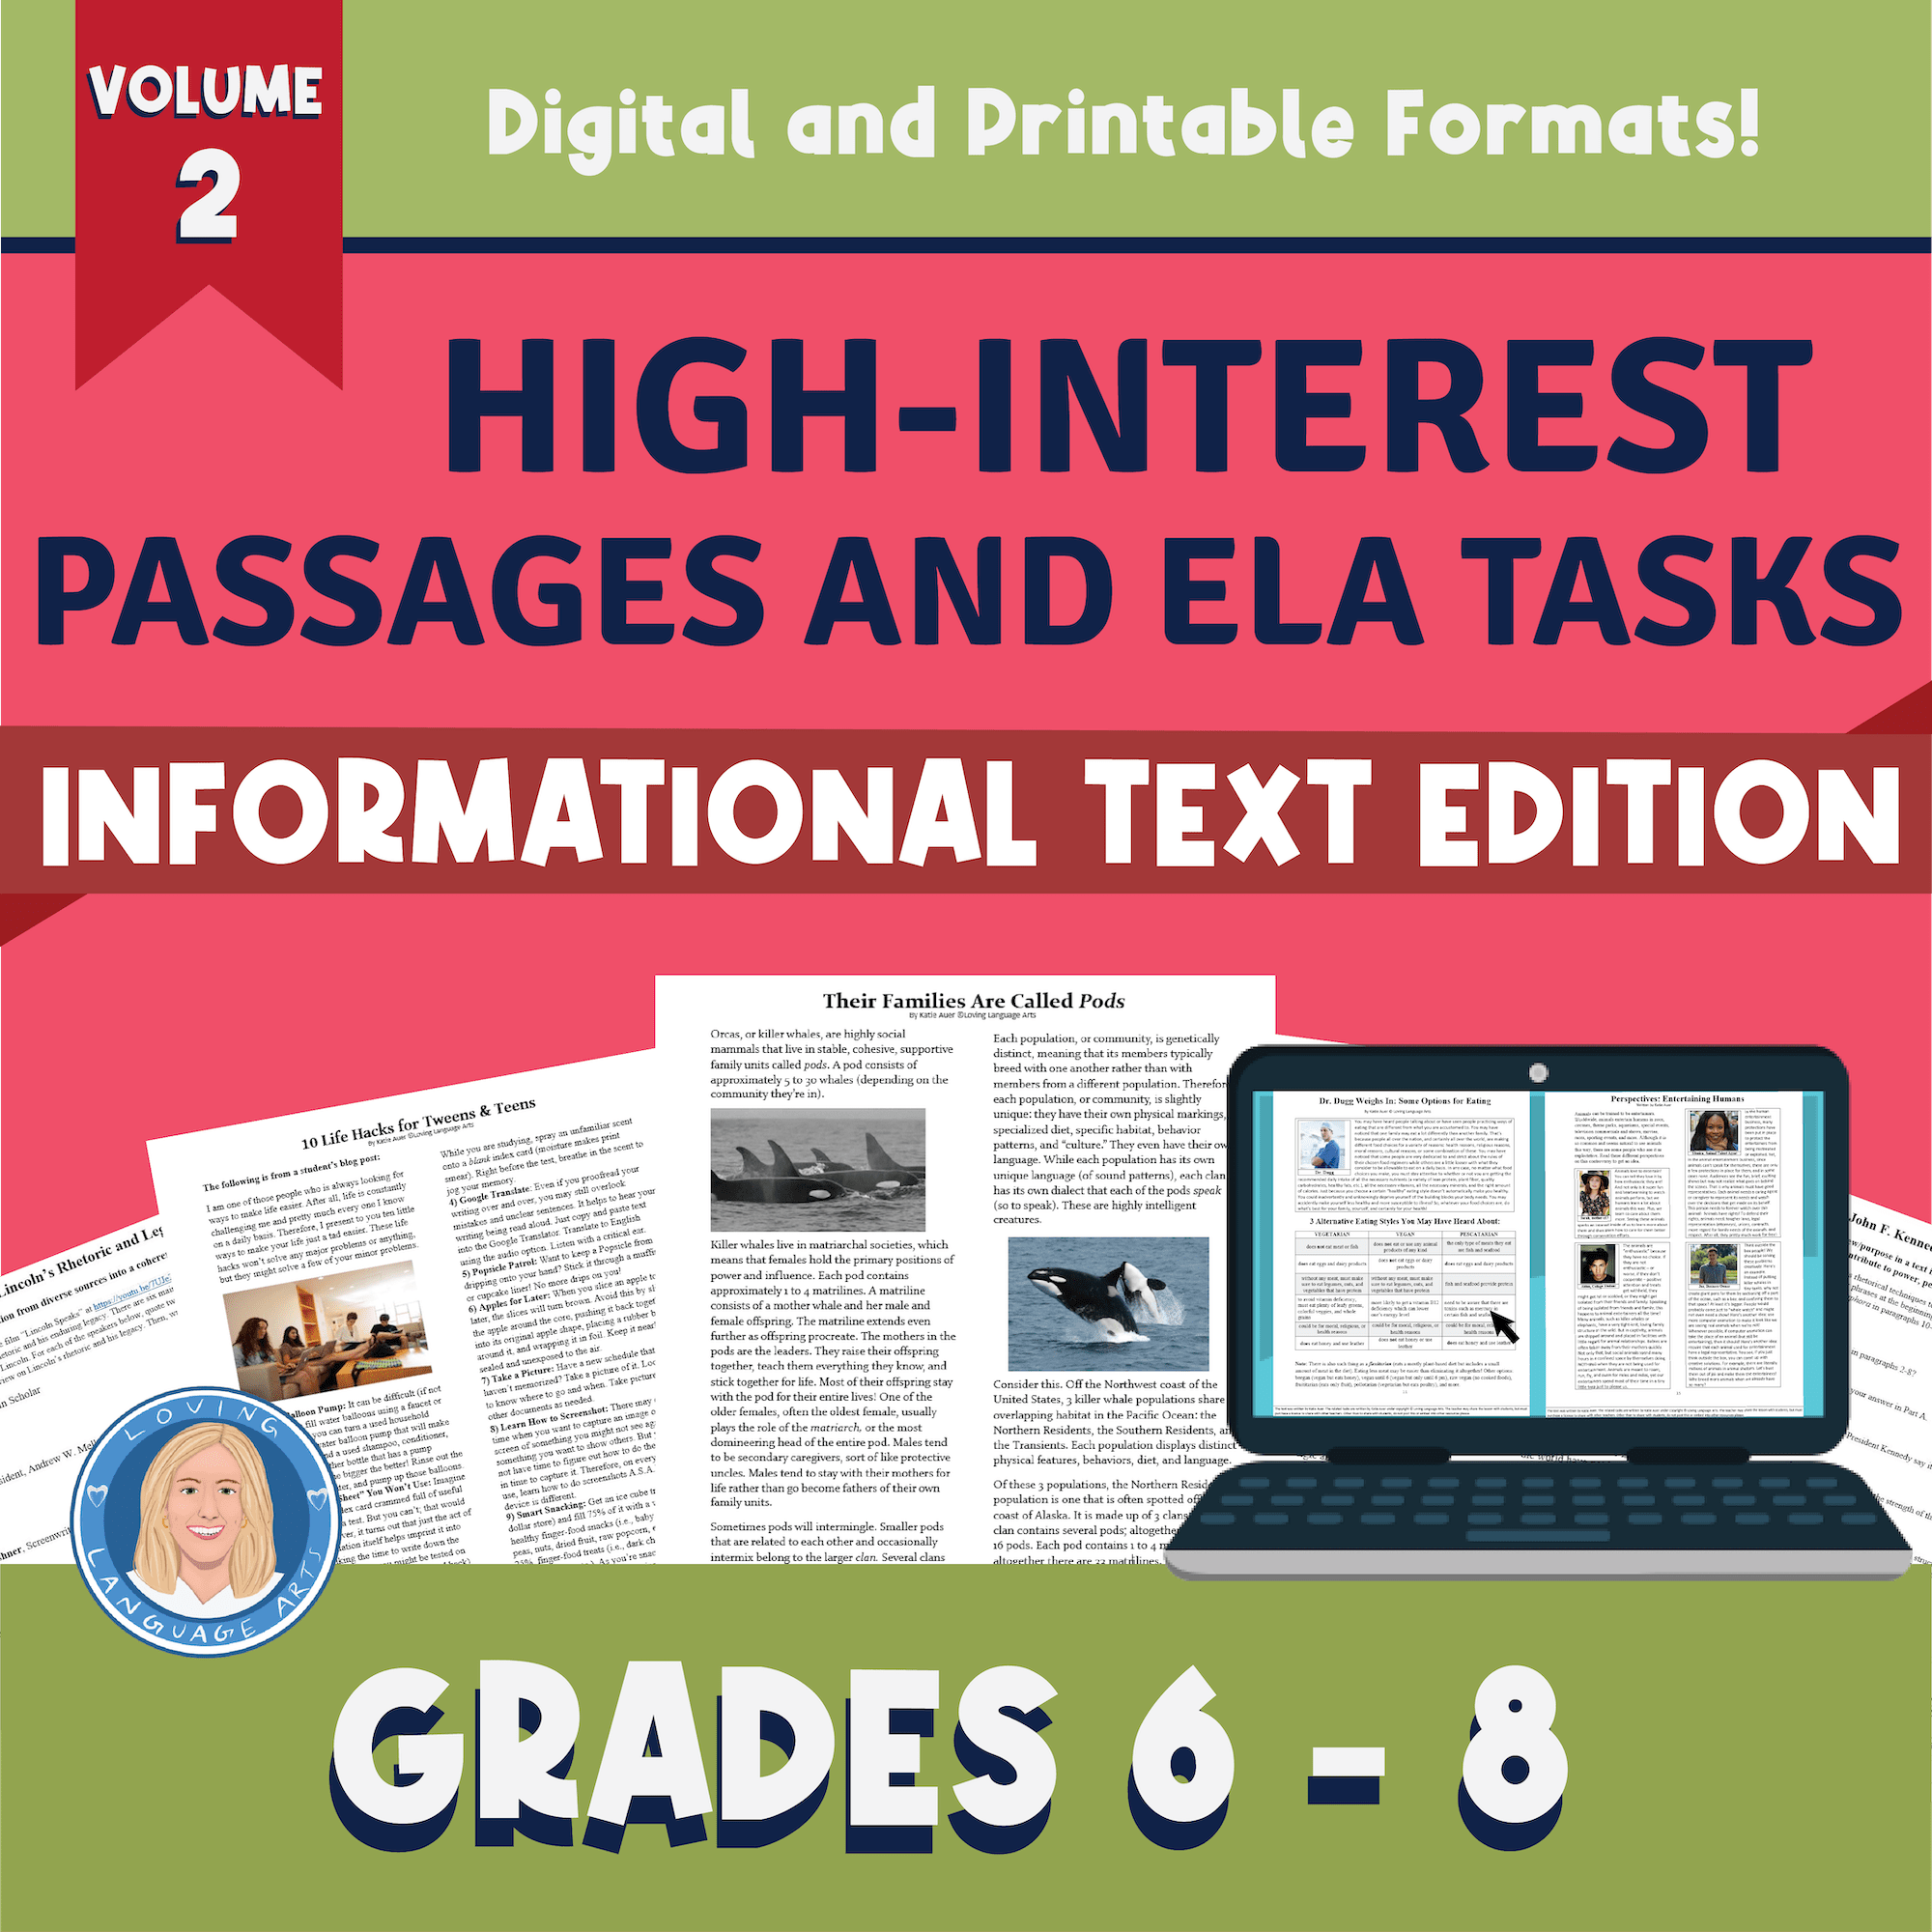 6th-8th grade language arts workbook volume 2 - High-interest passages and tasks.